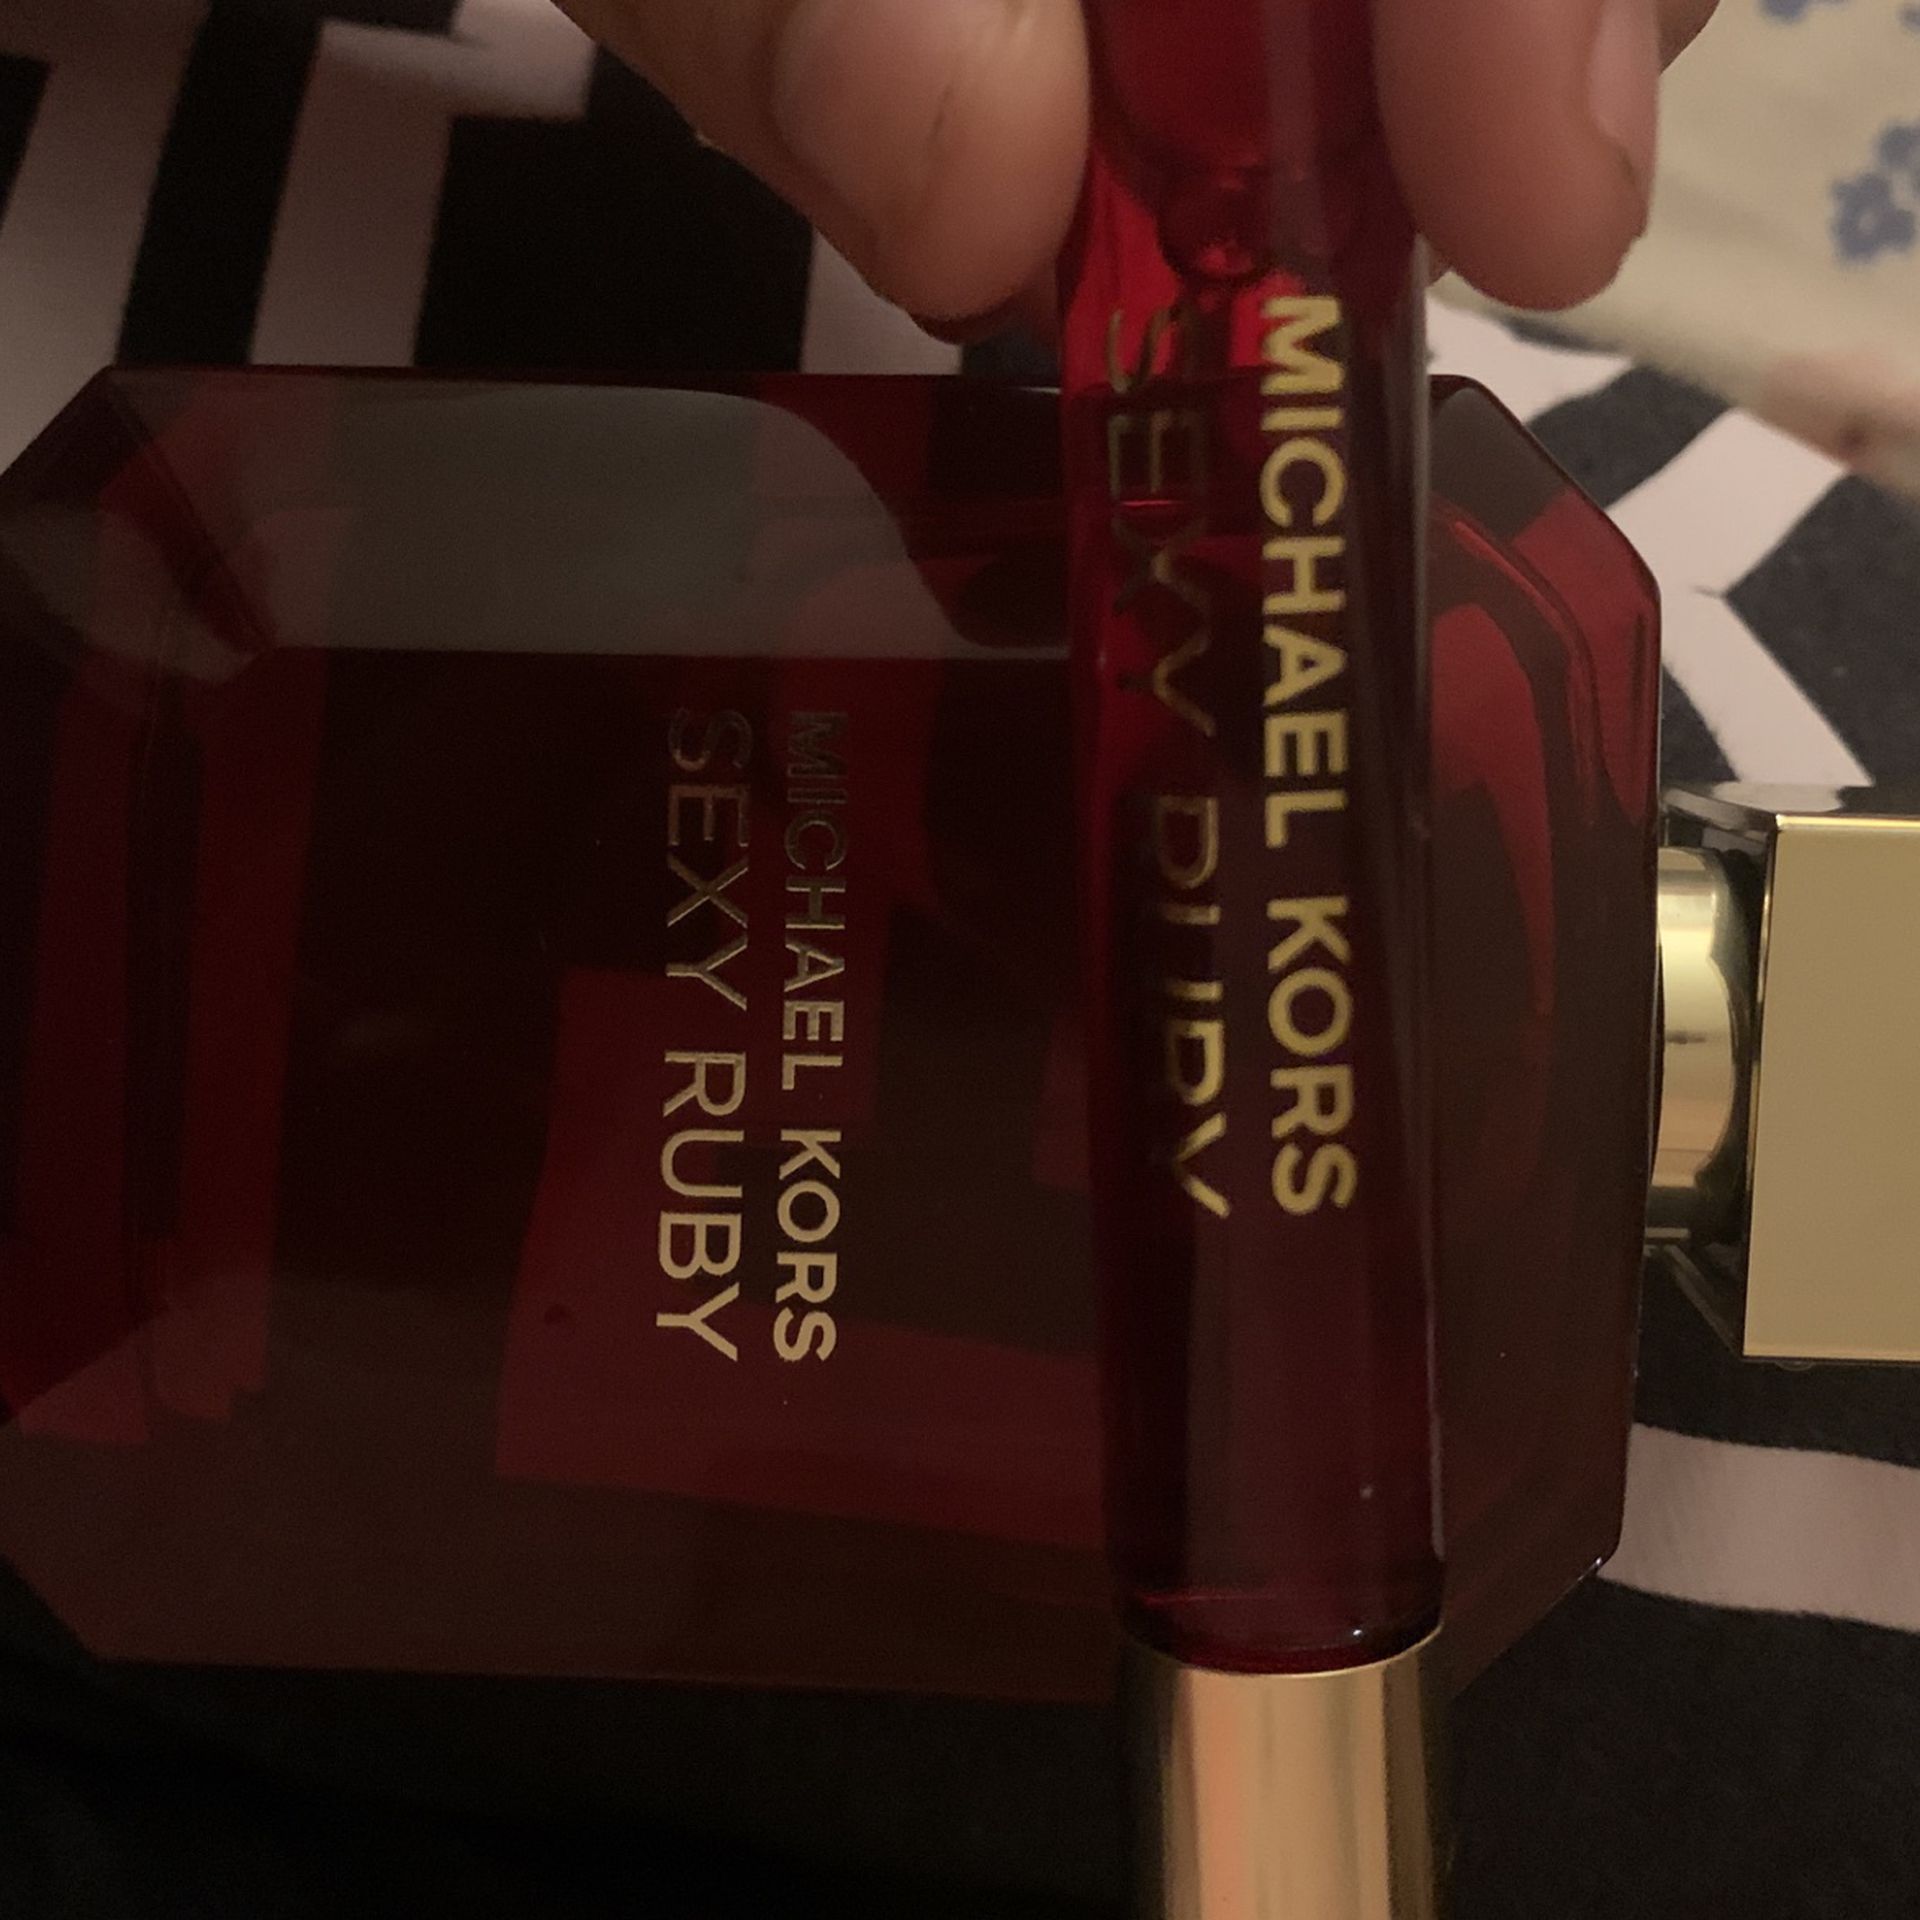 Michael Kors women’s perfume